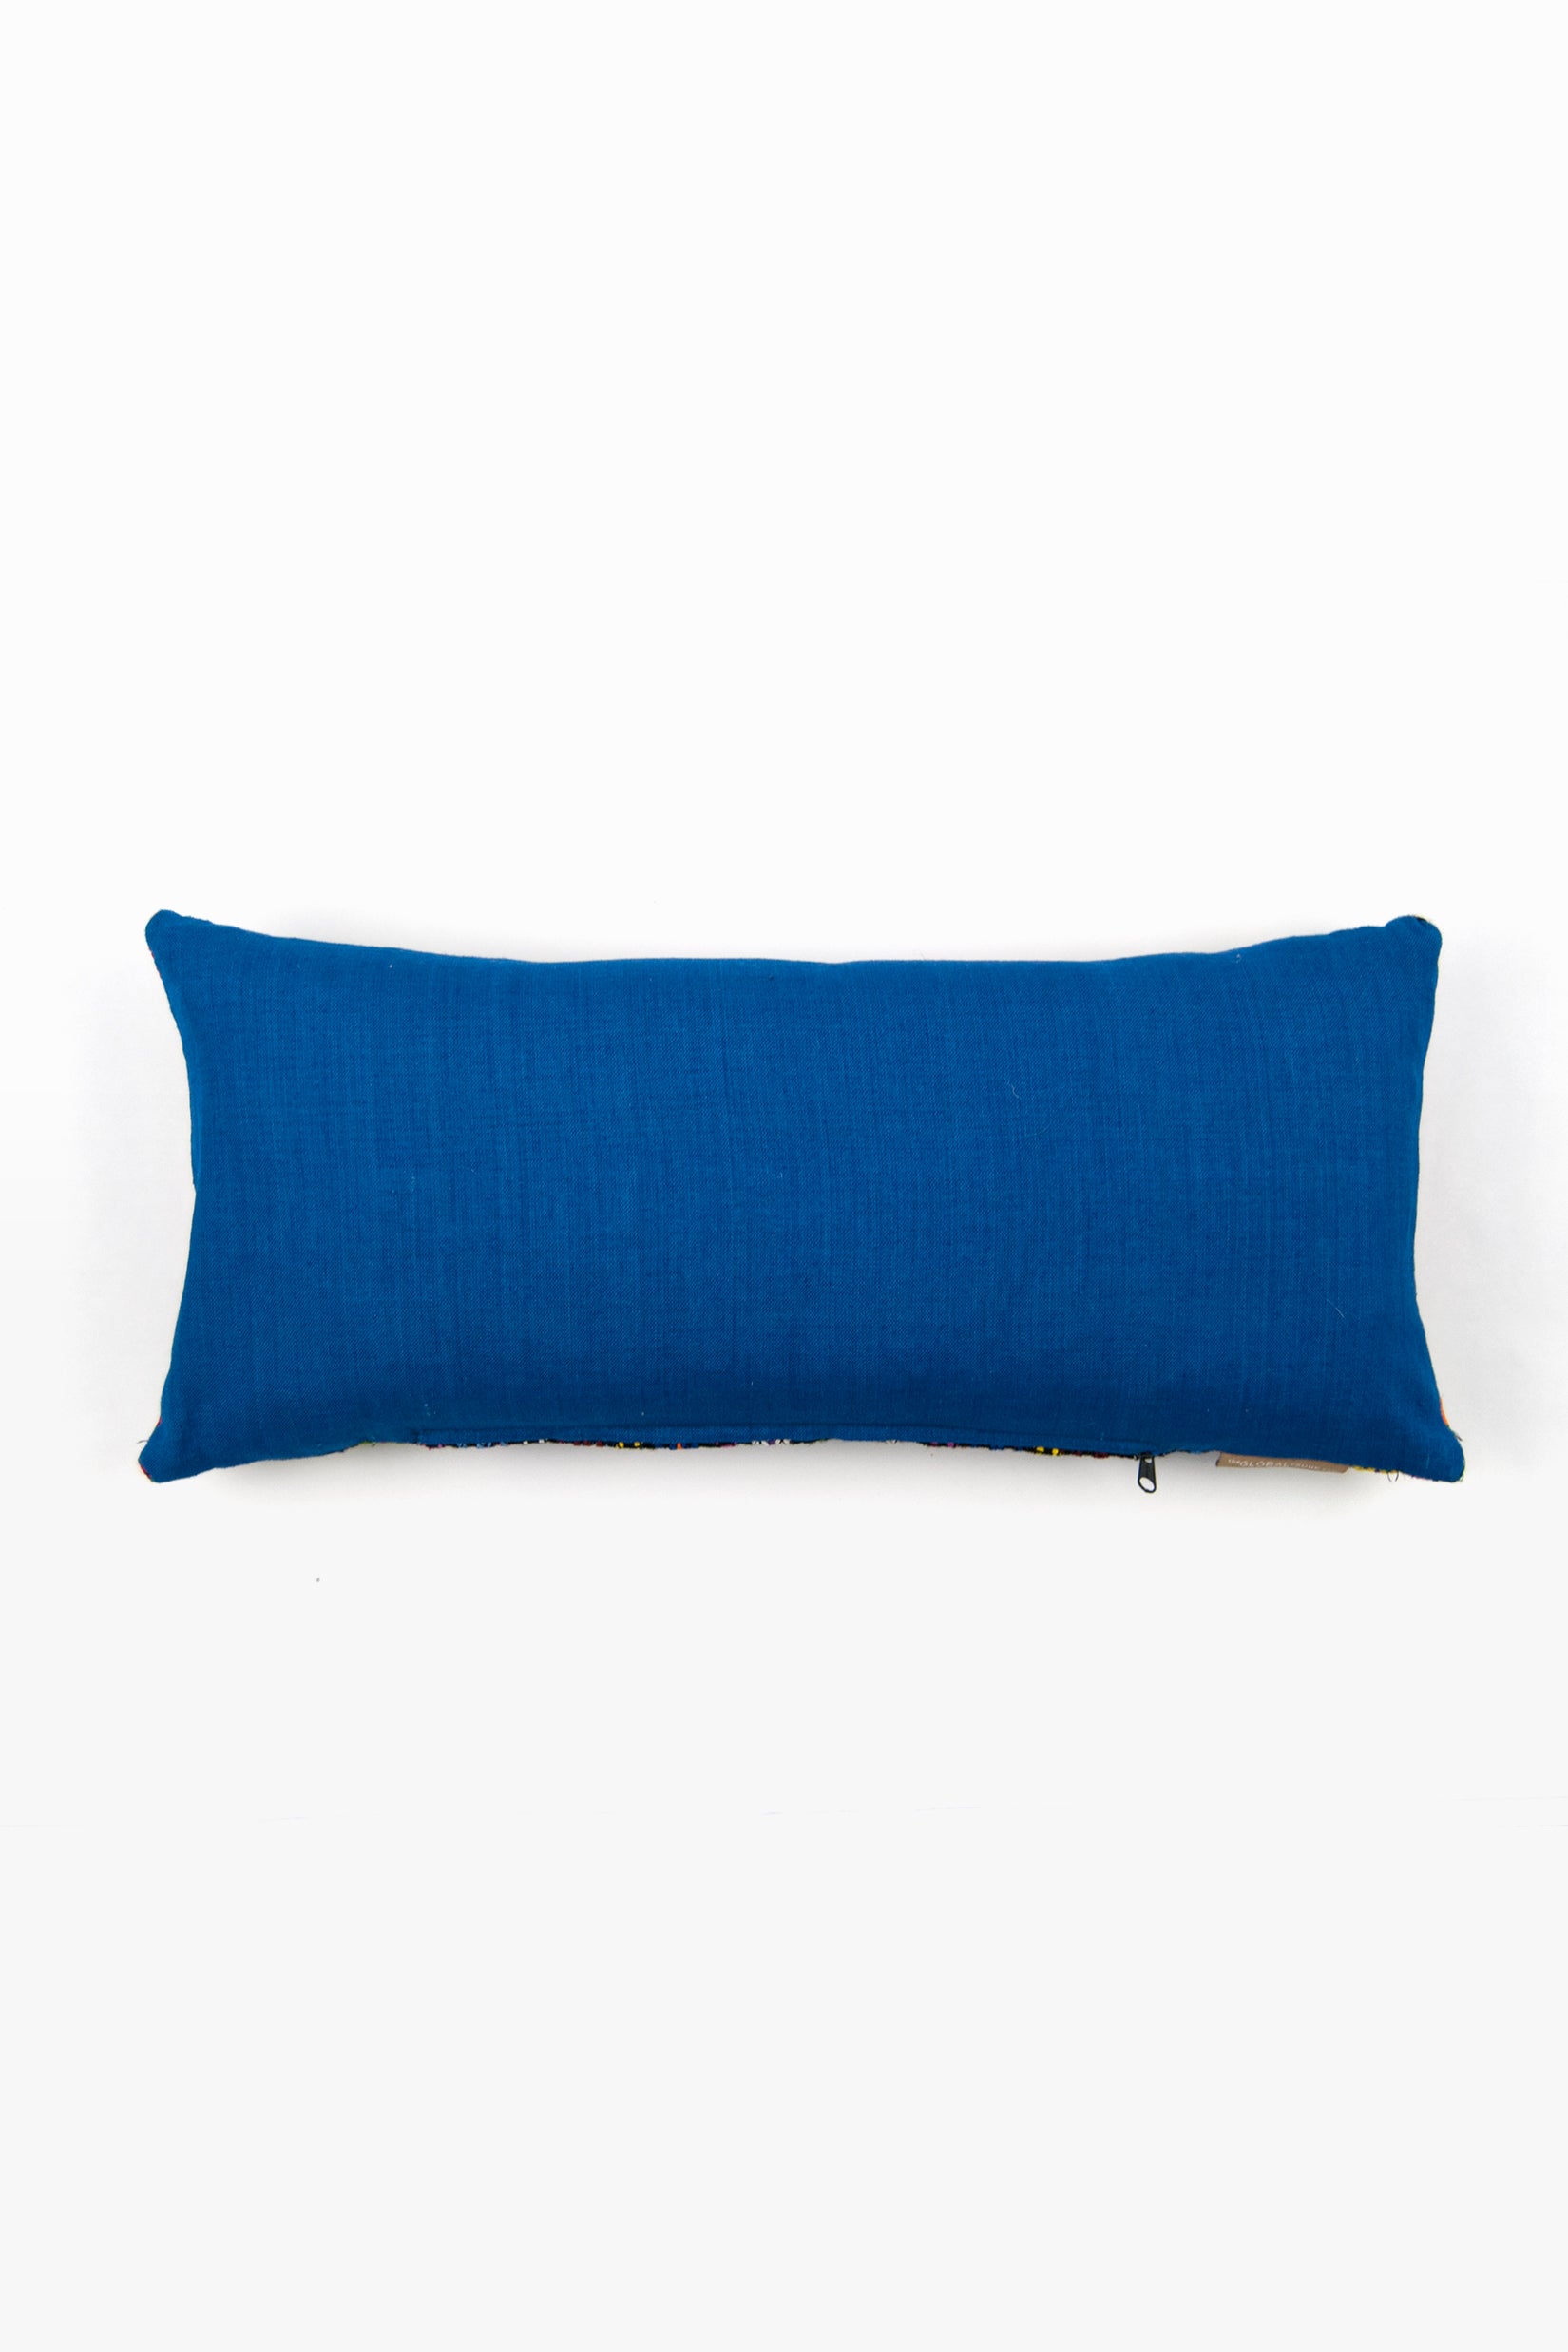 Maya Heirloom Pillow No. 1050